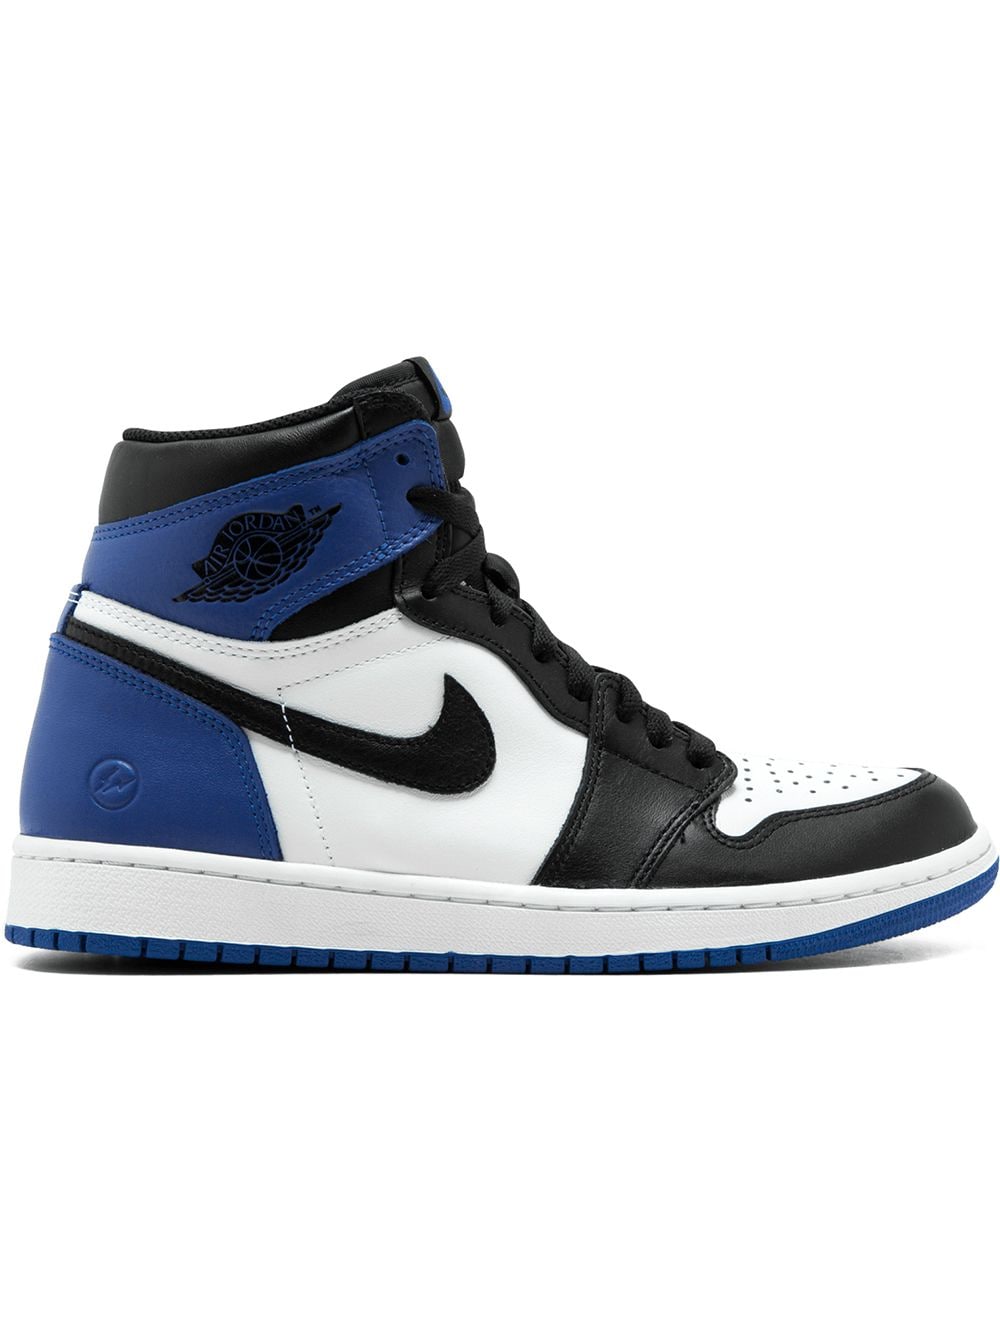 Jordan Air Jordan 1 Retro High OG "Fragment" sneakers - Blue